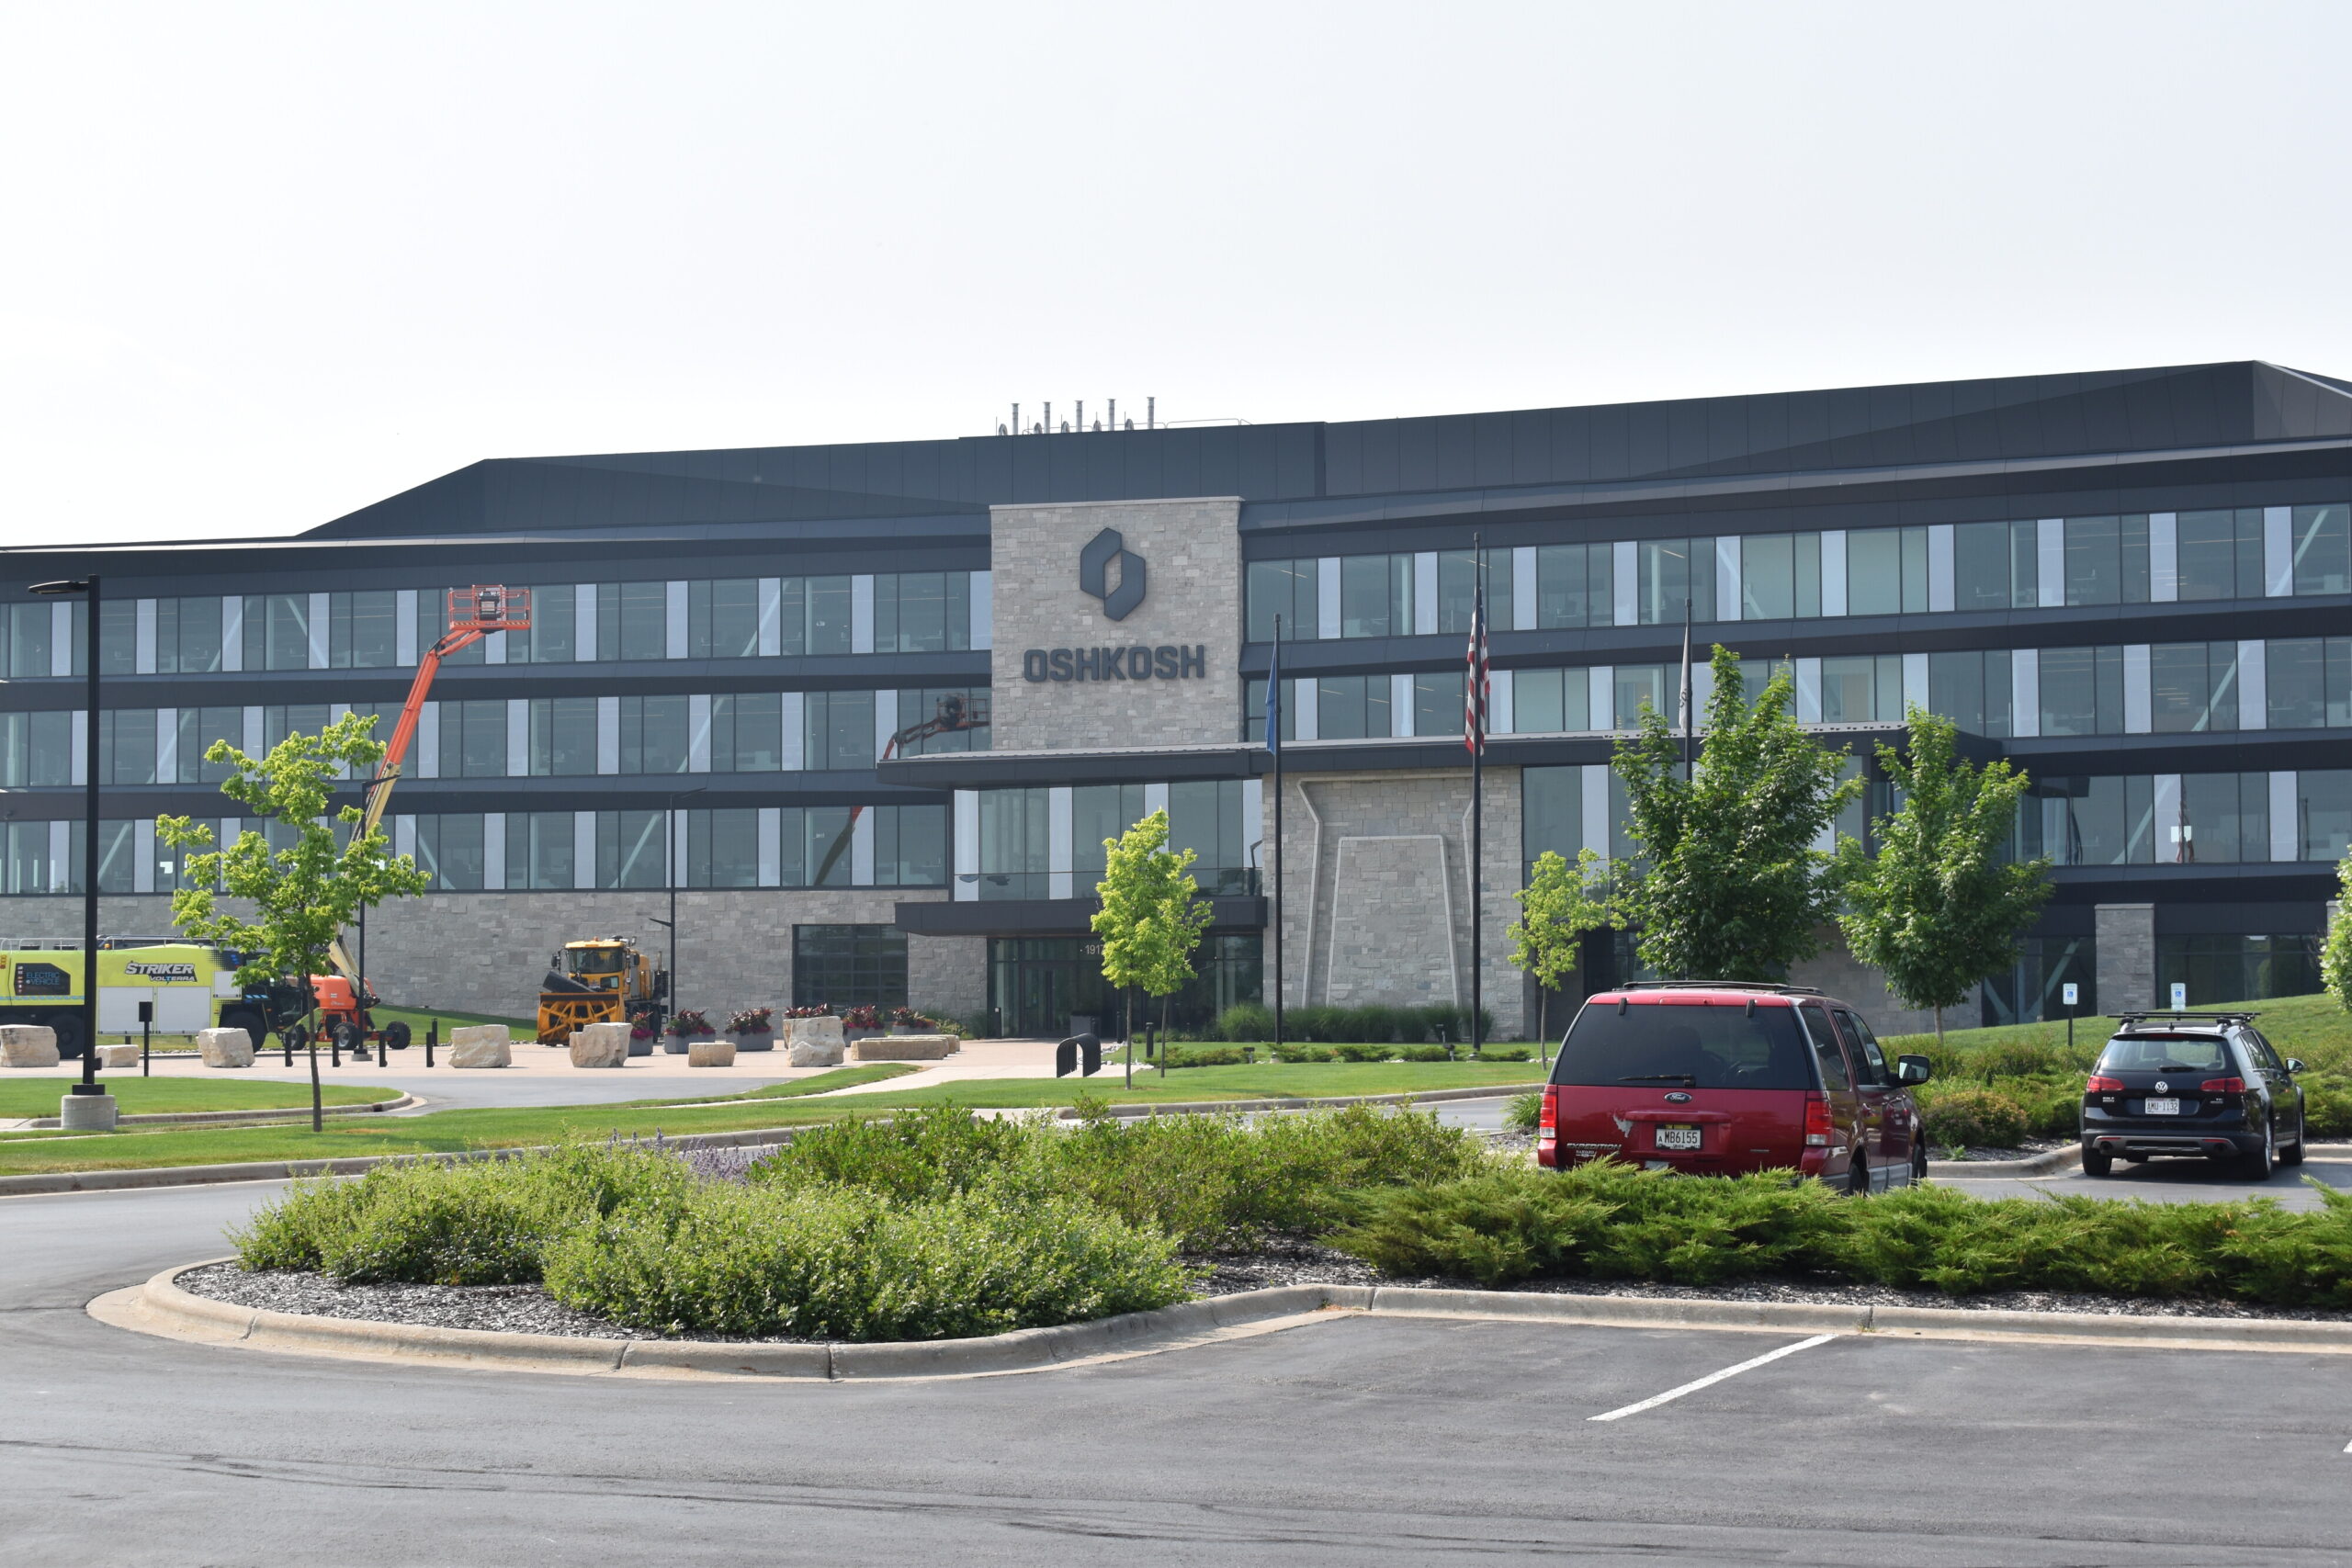 Oshkosh Corporation's corporate headquarters